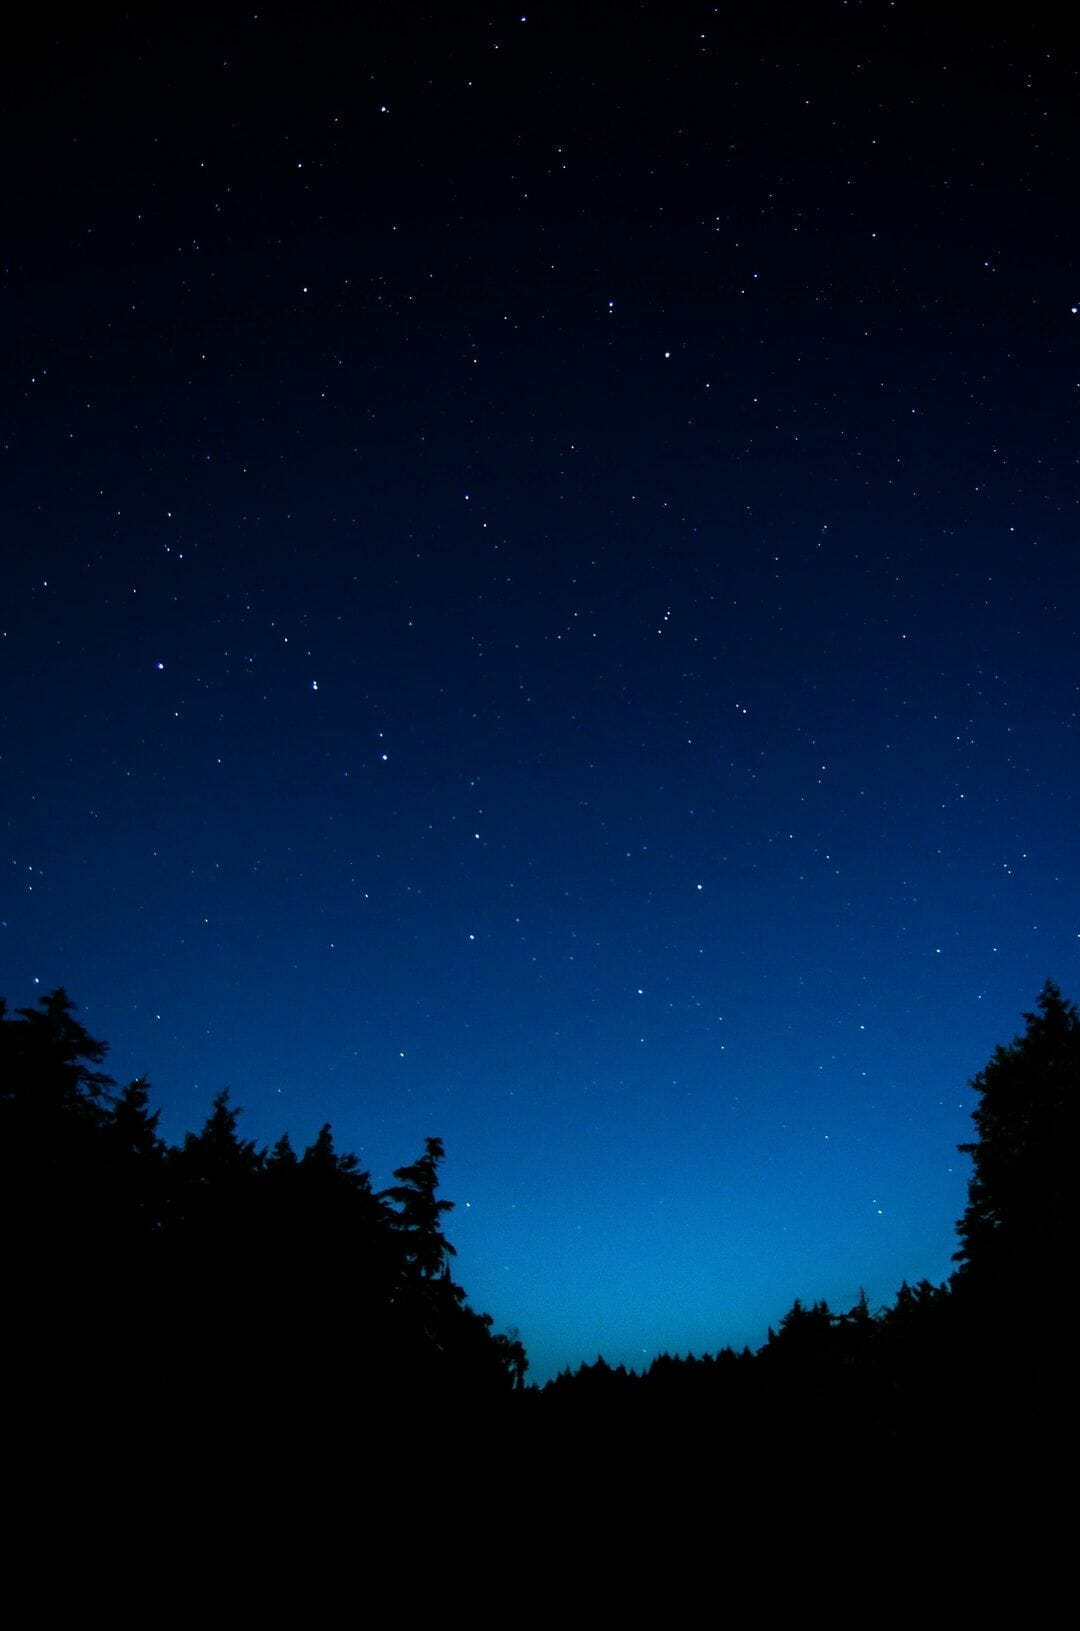 IPhone wallpaper with a night sky and stars. - Dark blue, navy blue, sad, night